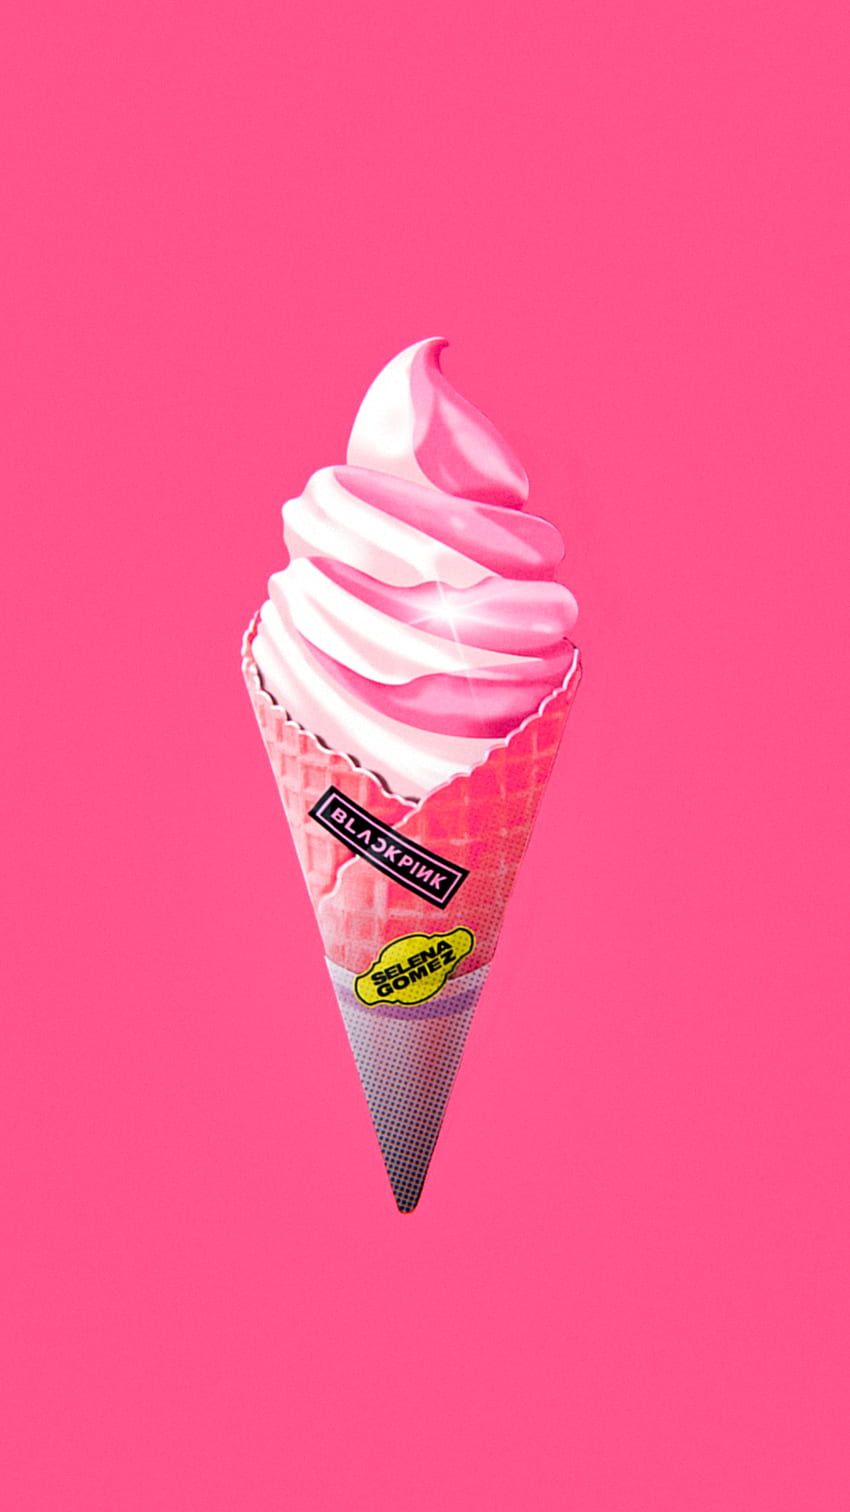 Ice cream cone with pink background - Ice cream